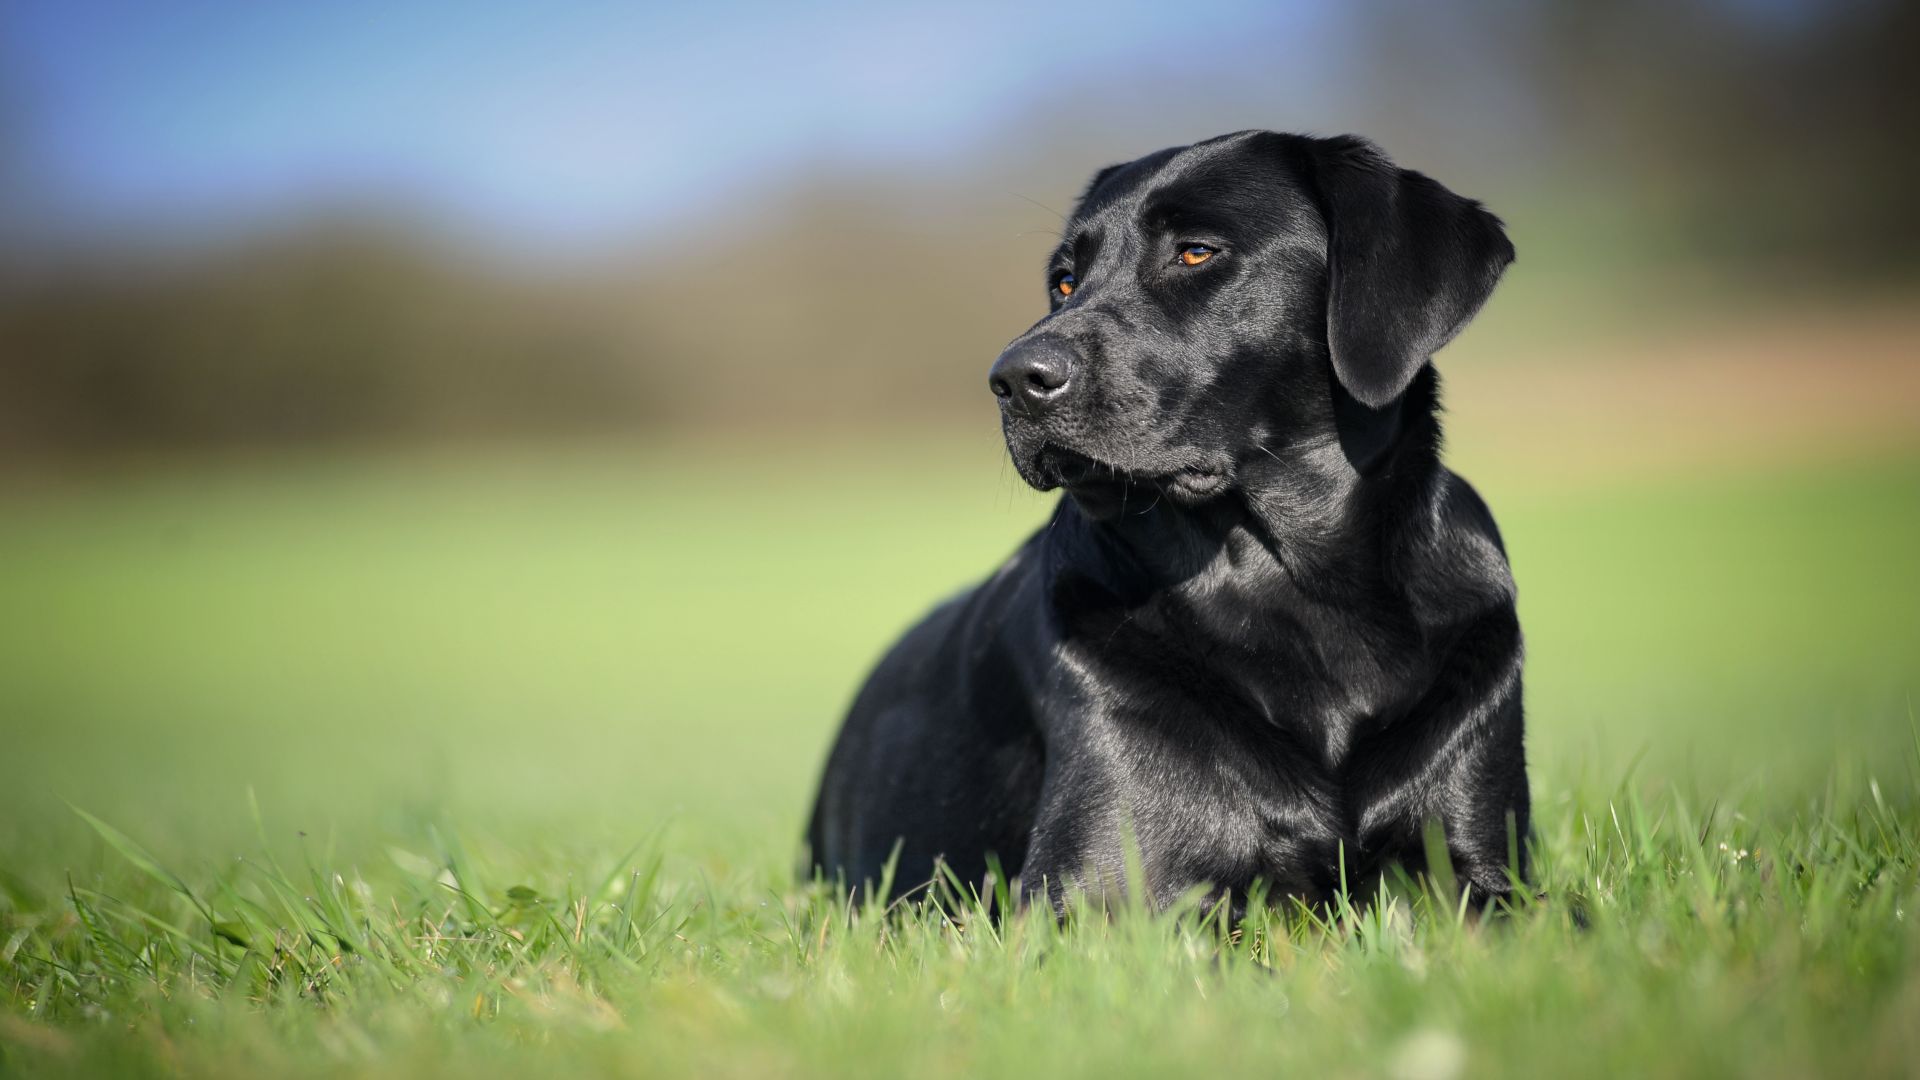 Desktop Wallpaper Black Pet Dog, Labrador Retriever, Grass Field, Hd Image,  Picture, Background, Nul8lo